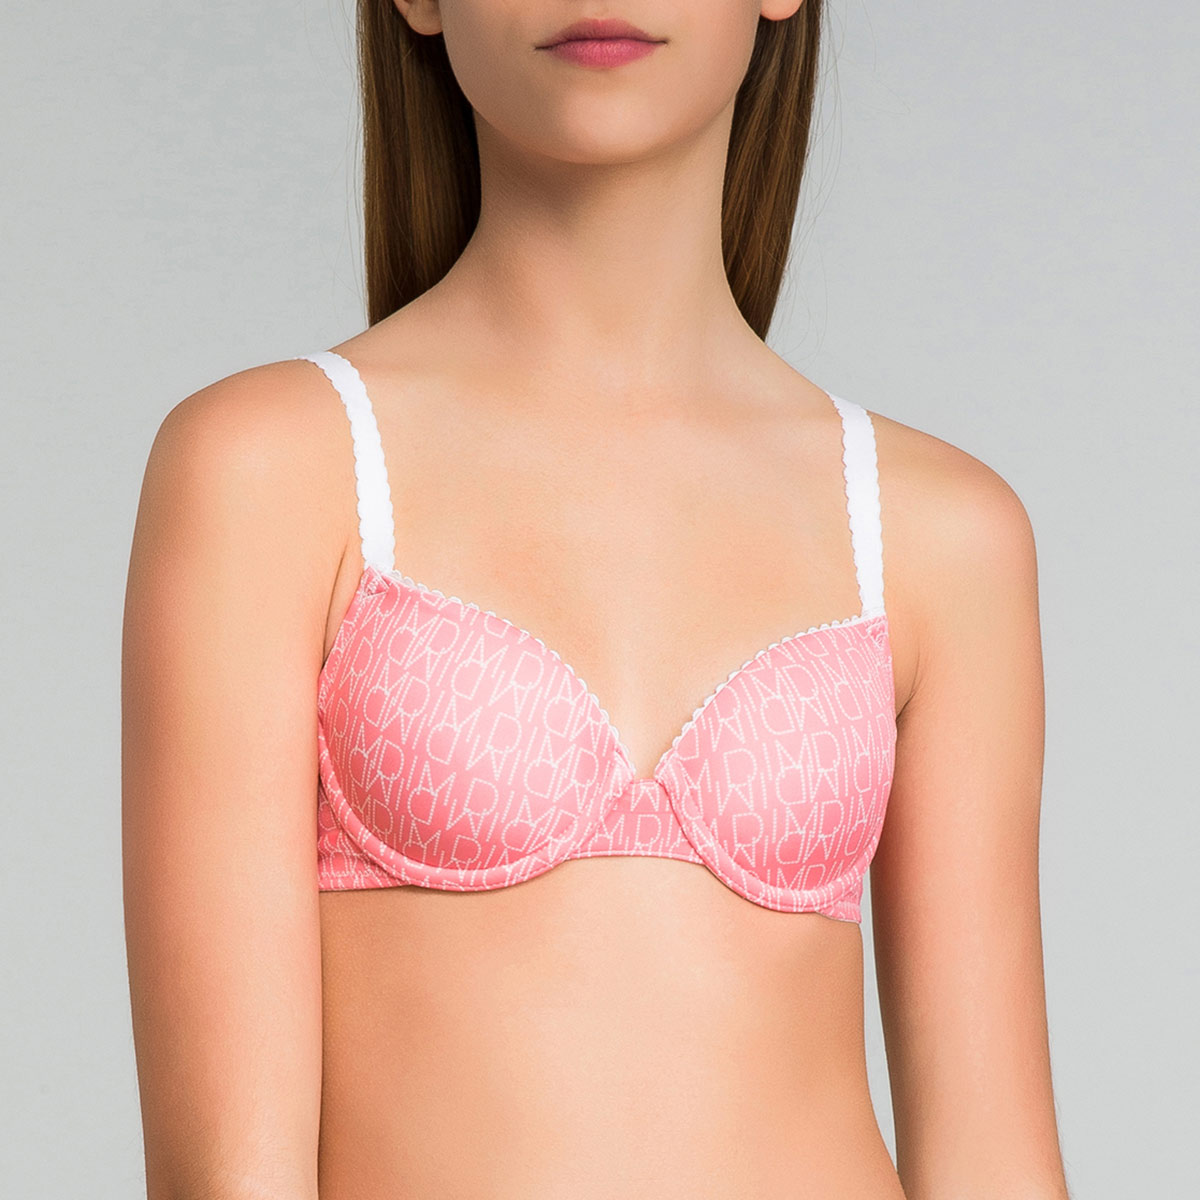 Calv women bras pink 32b